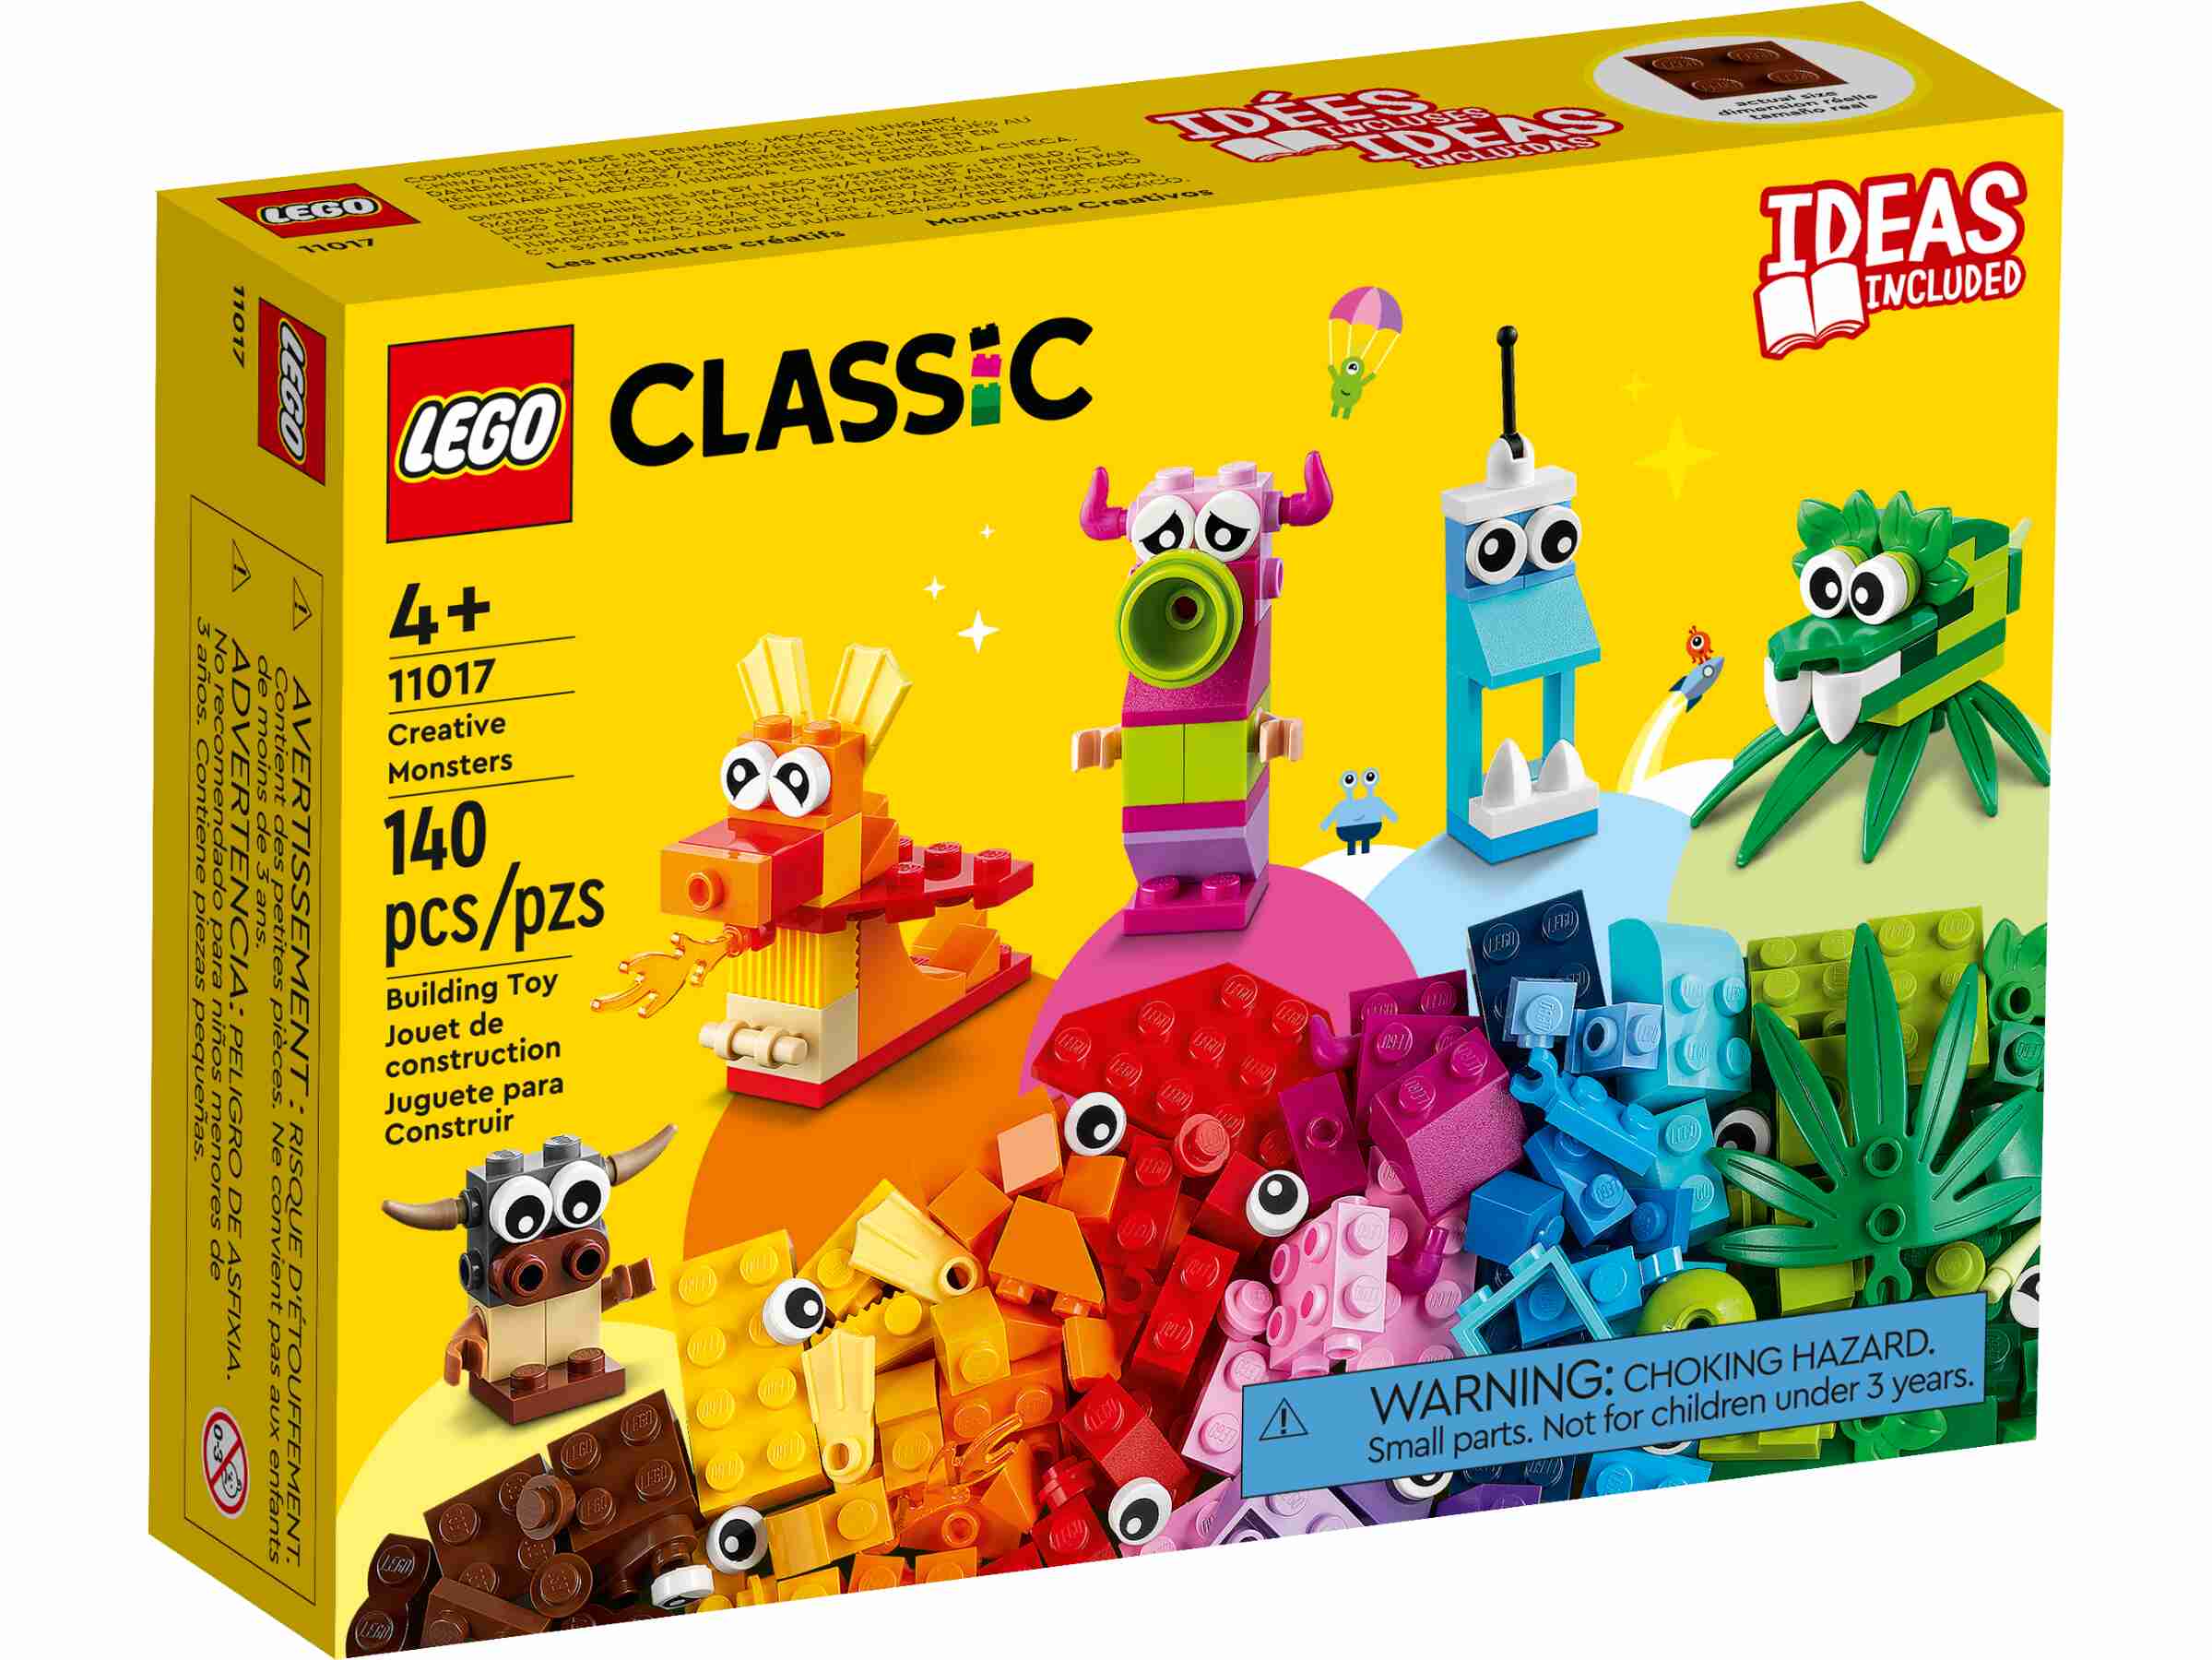 LEGO 11017 build toy Toys Creative Monsters, monster 5 Classic ideas: Lobigo.co.uk